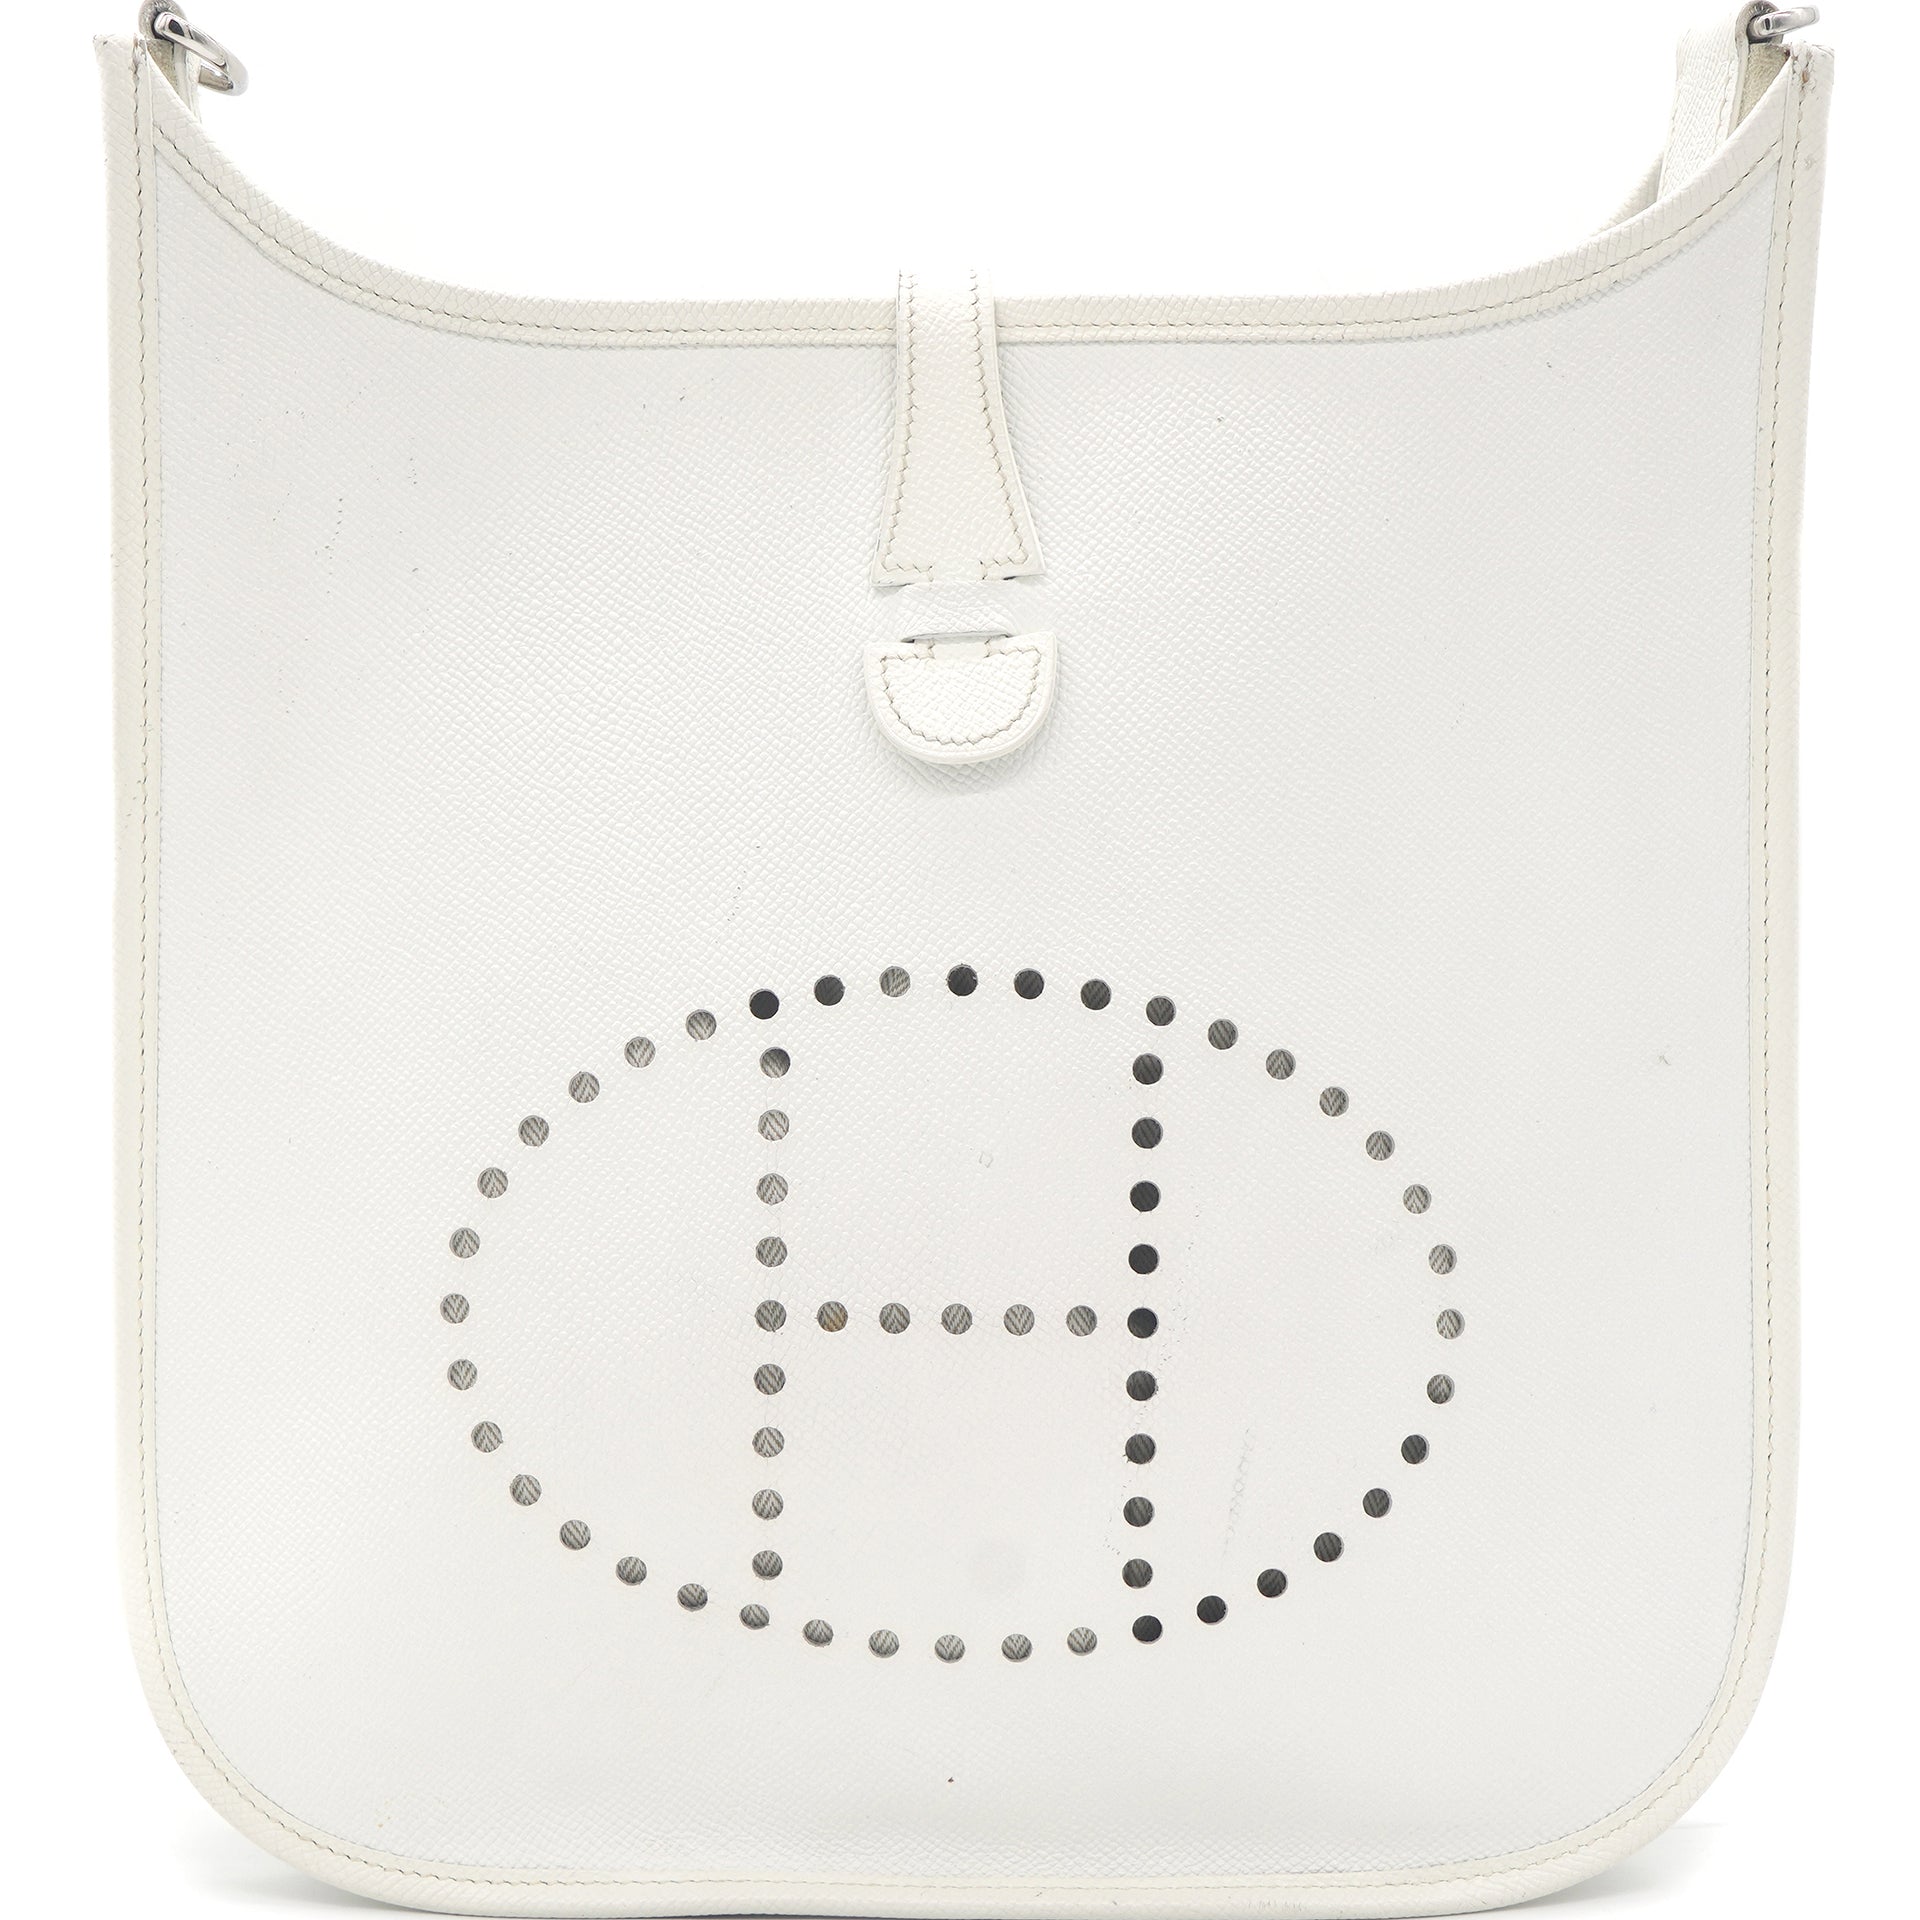 Blanc Epsom Leather Evelyne 29 Bag